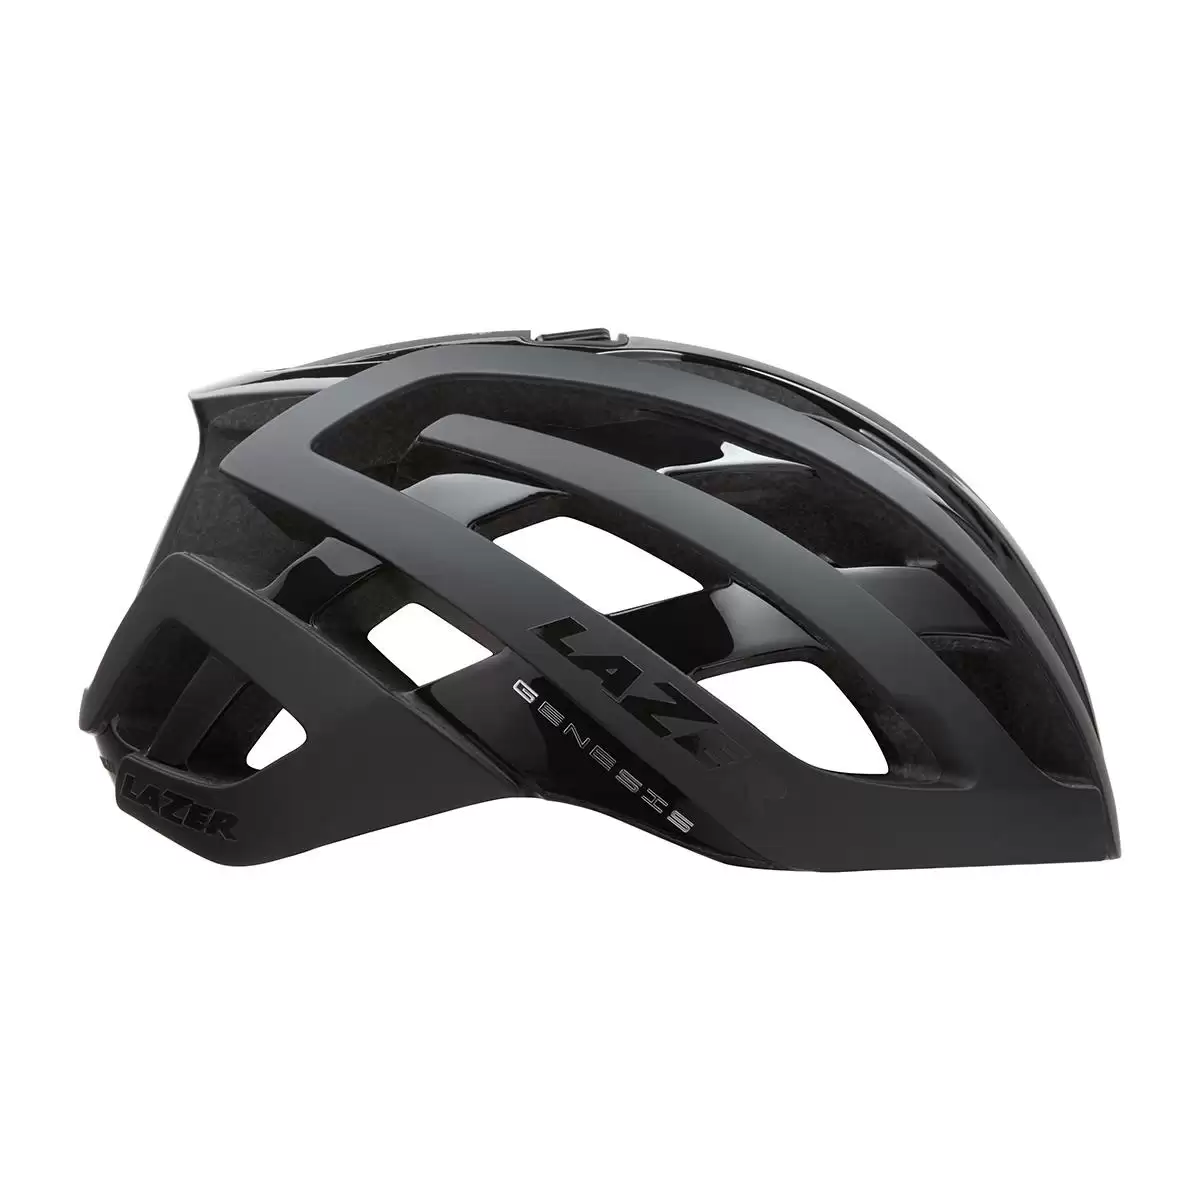 Genesis Helmet Black Size S (52-56cm) - image